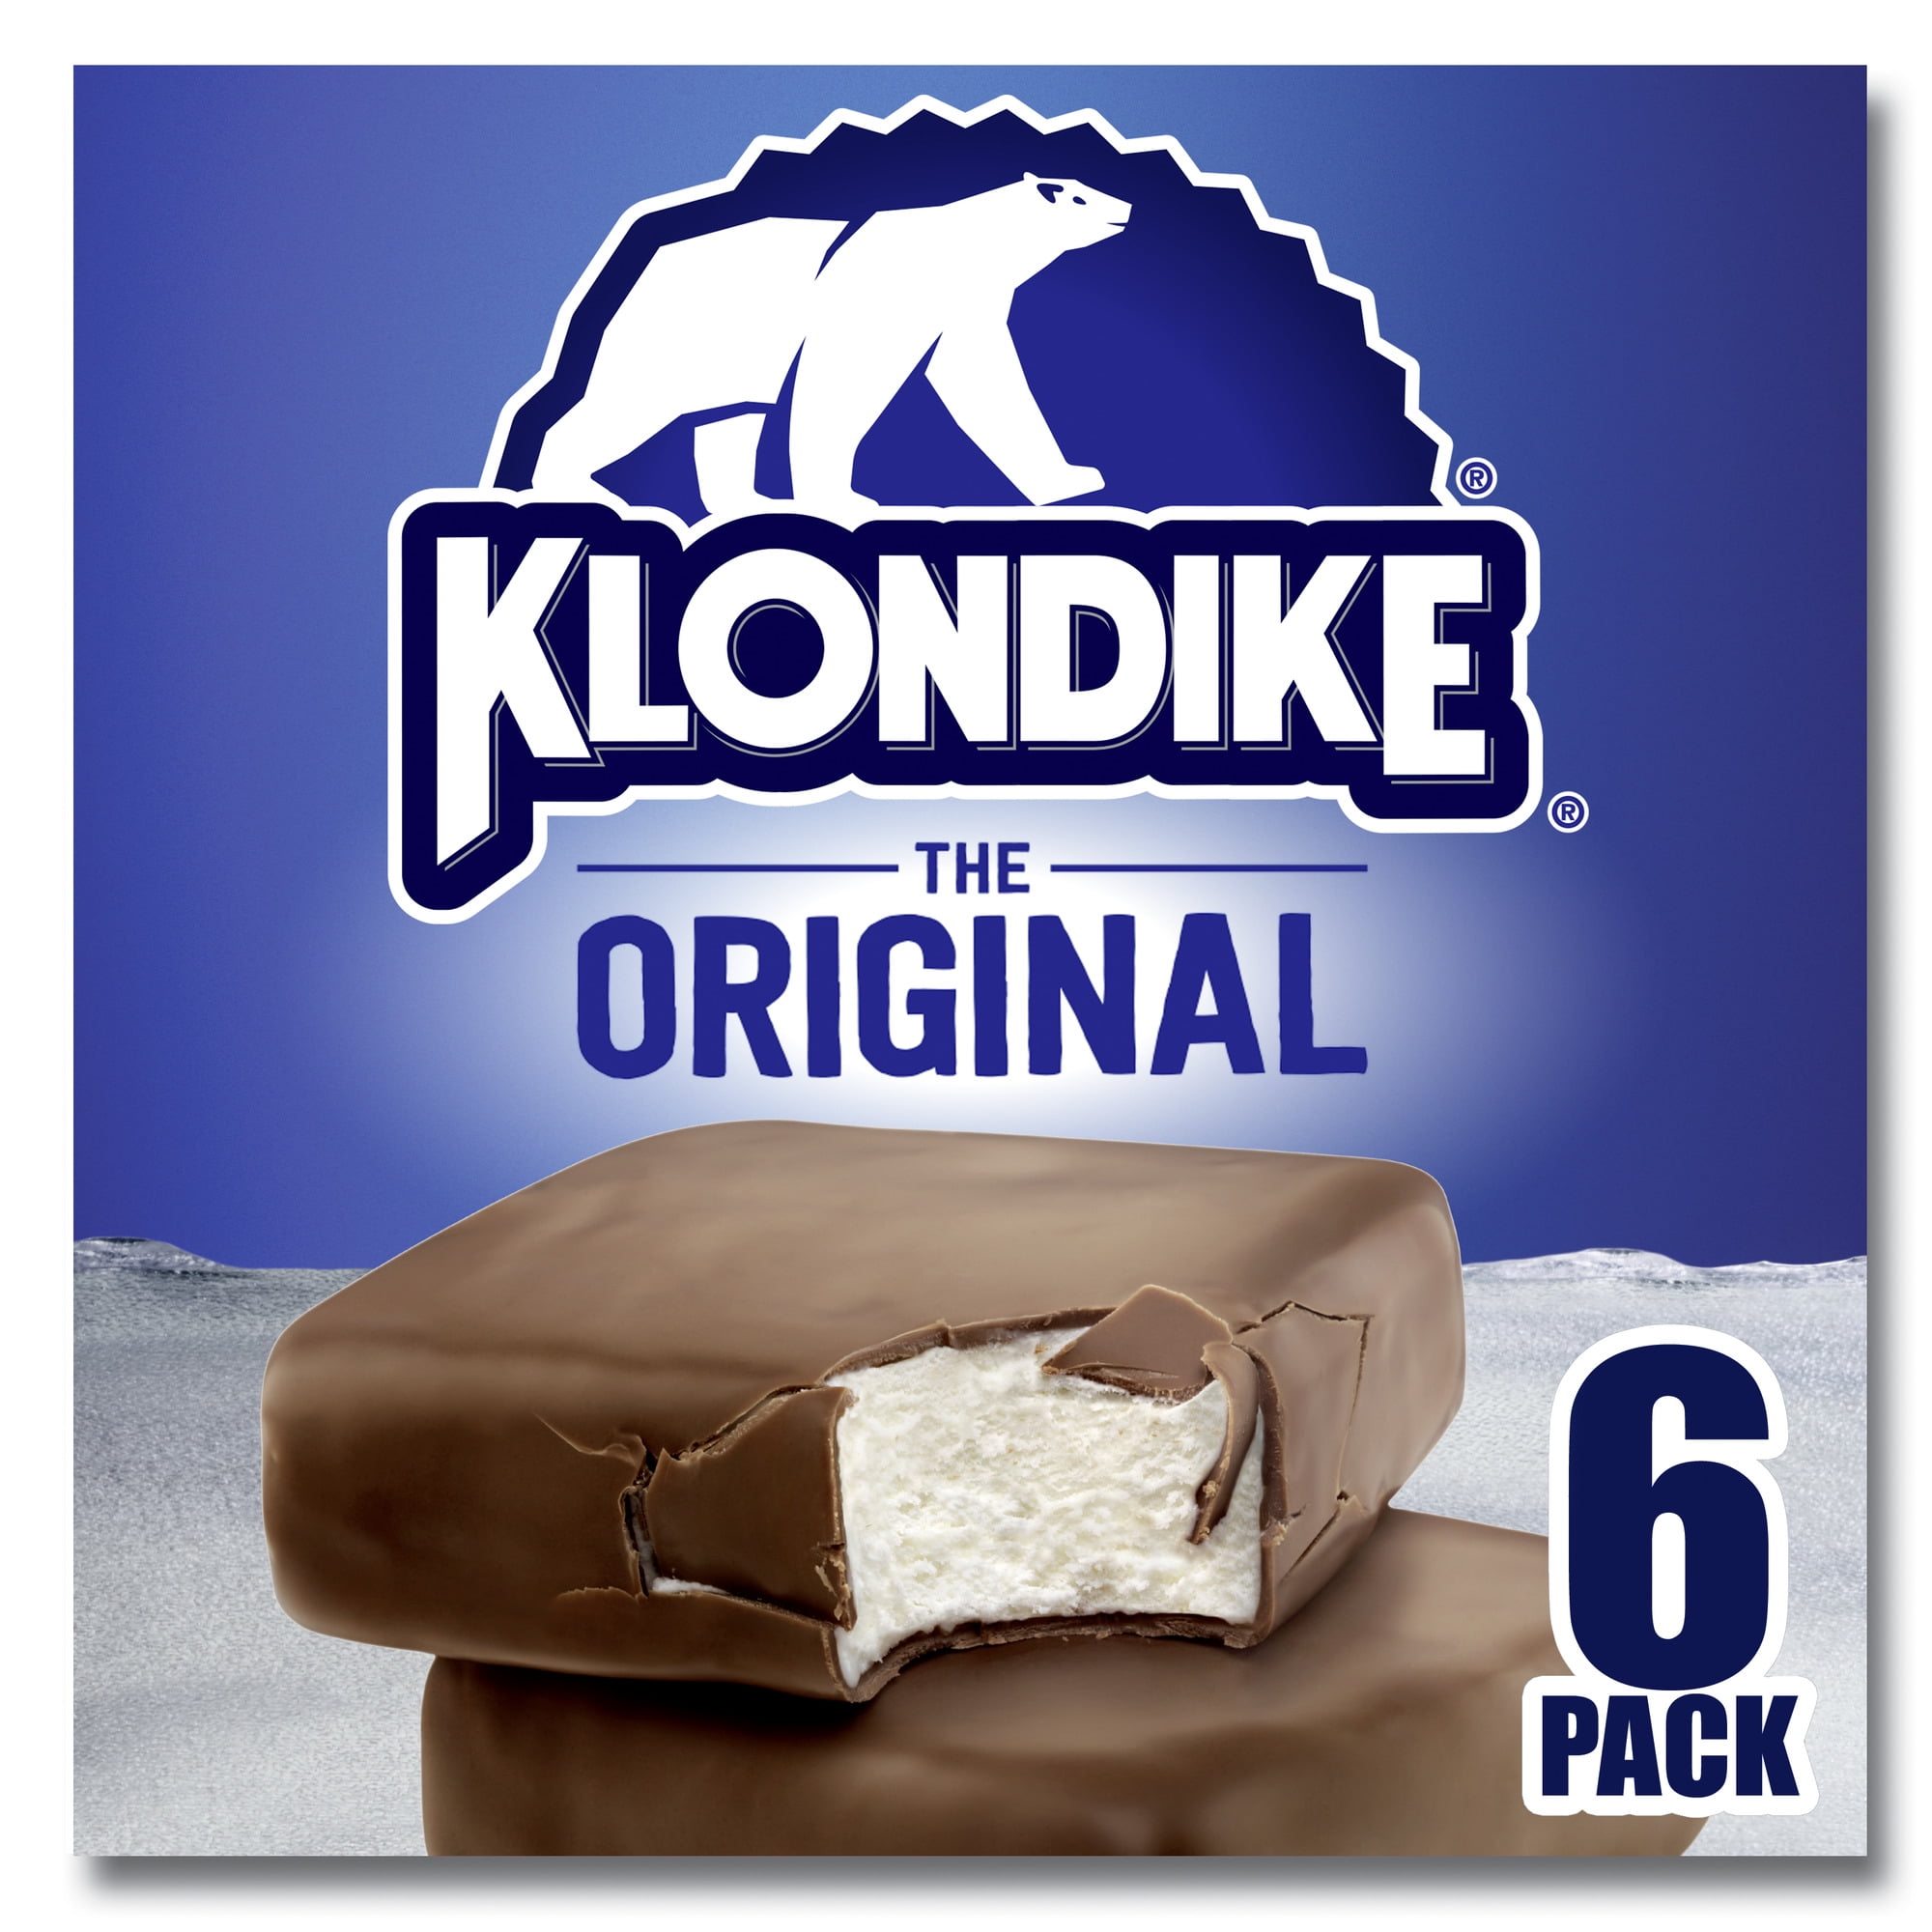 Klondike Original Vanilla Ice Cream Bars Dipped in Chocolate Coating 4.5 fl oz, 6 Count